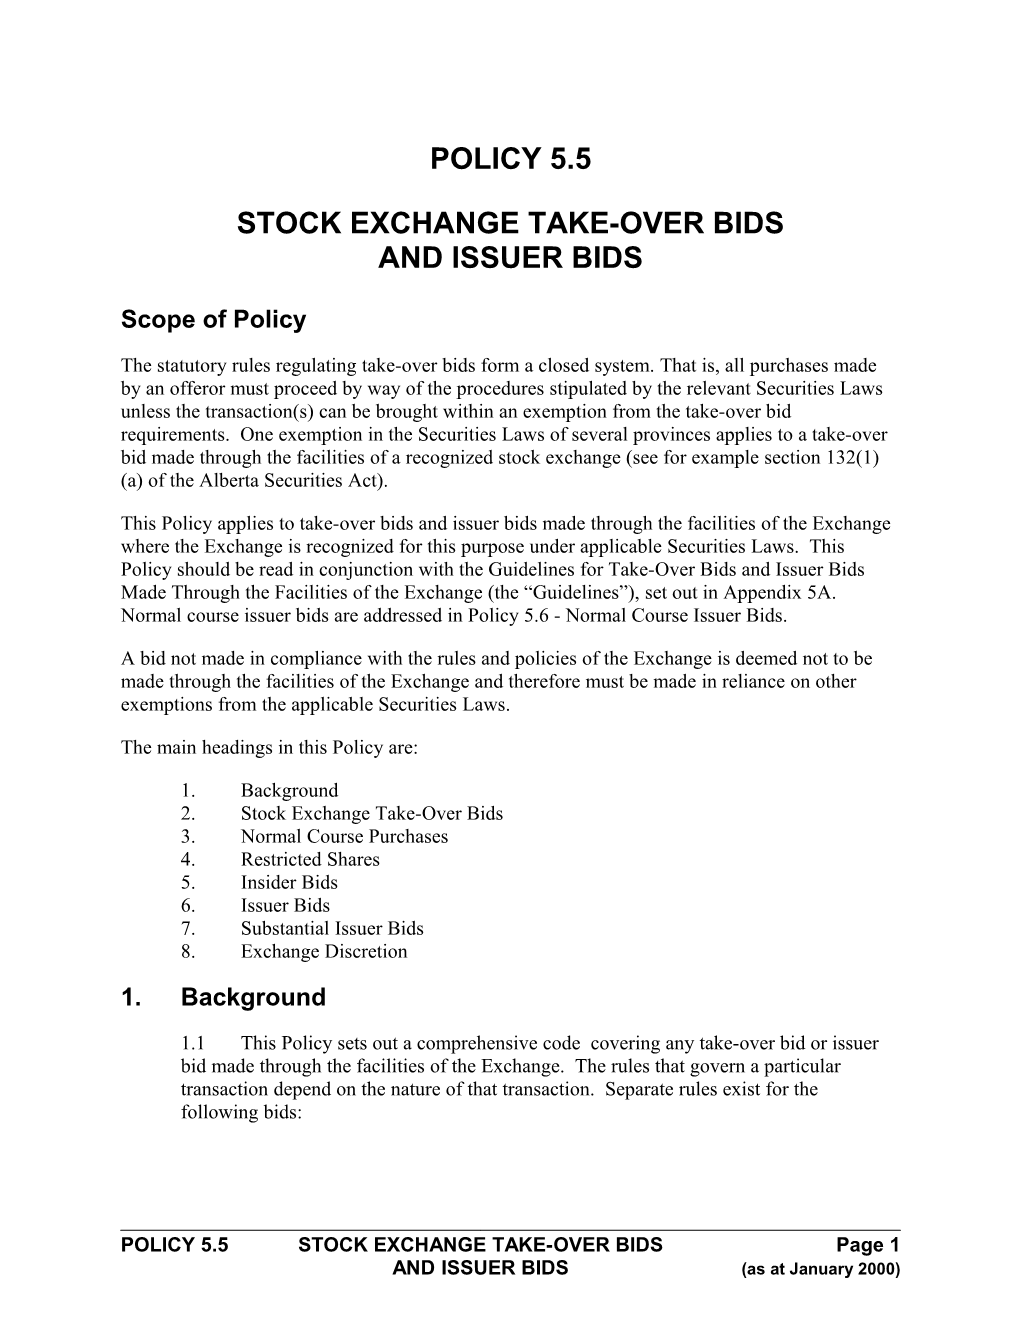 Stock Exchange Take-Over Bidsand Issuer Bids